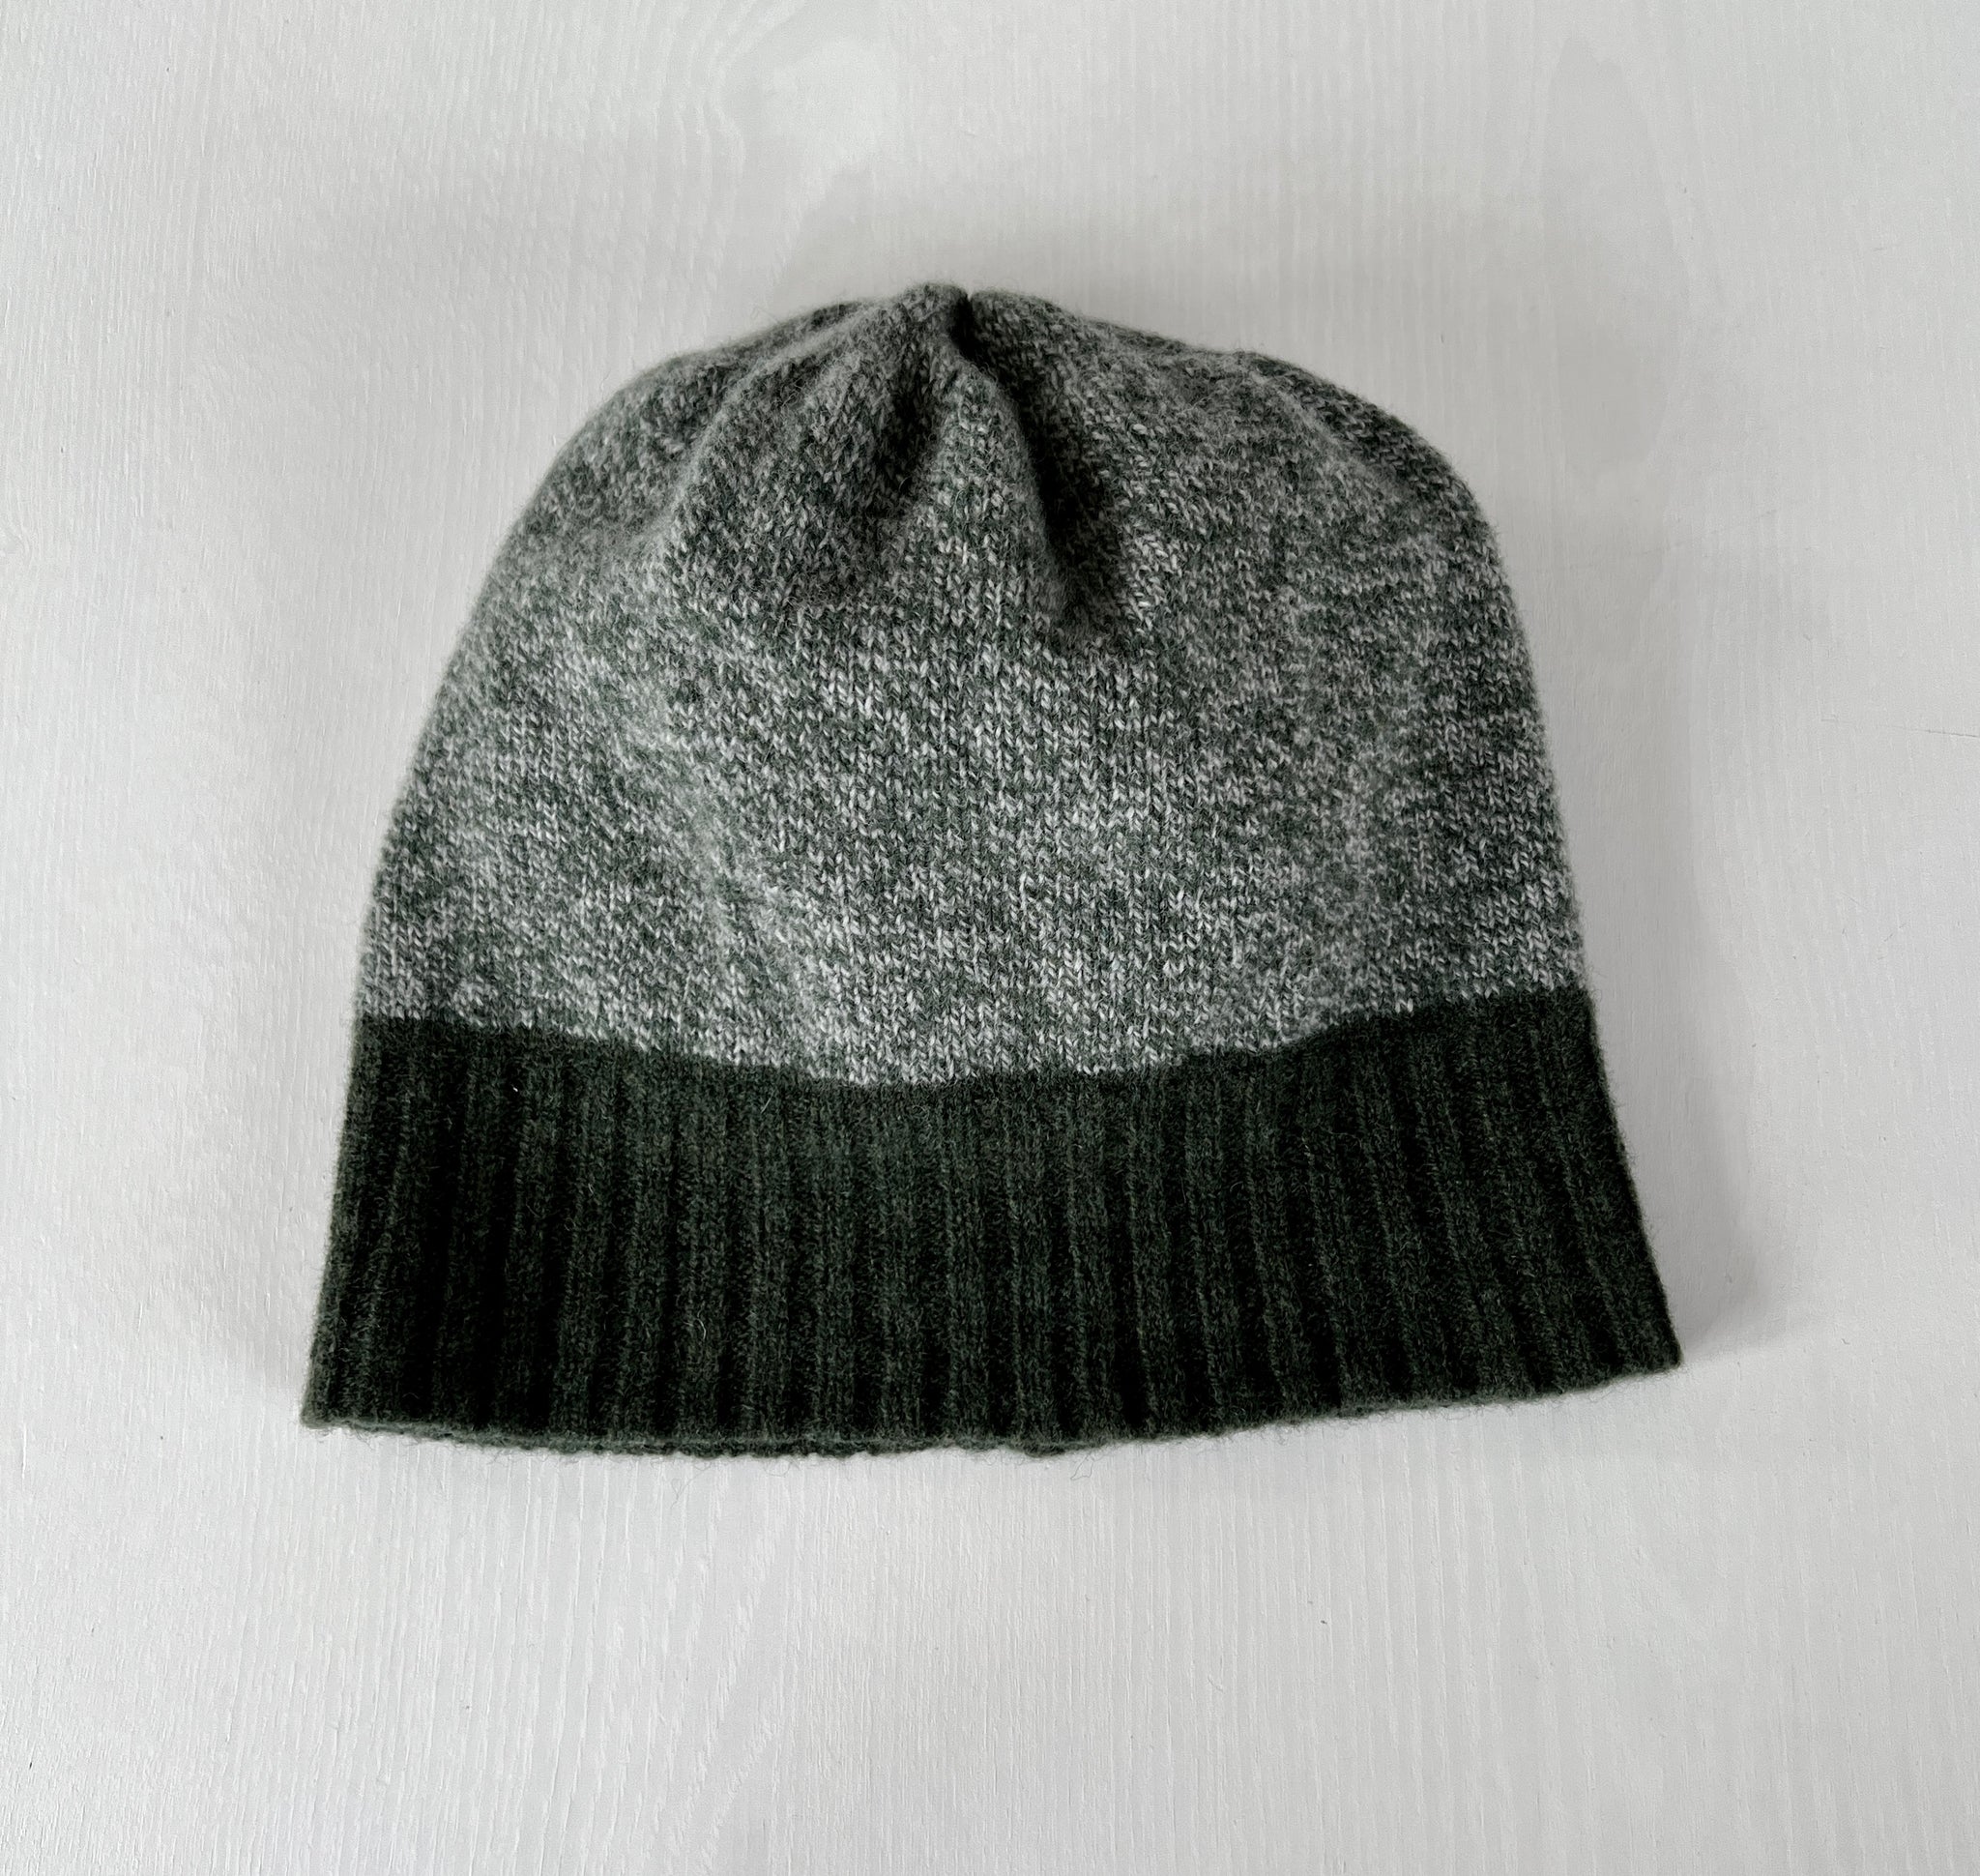 Hat - Nordic hat soft lambswool marled yarn